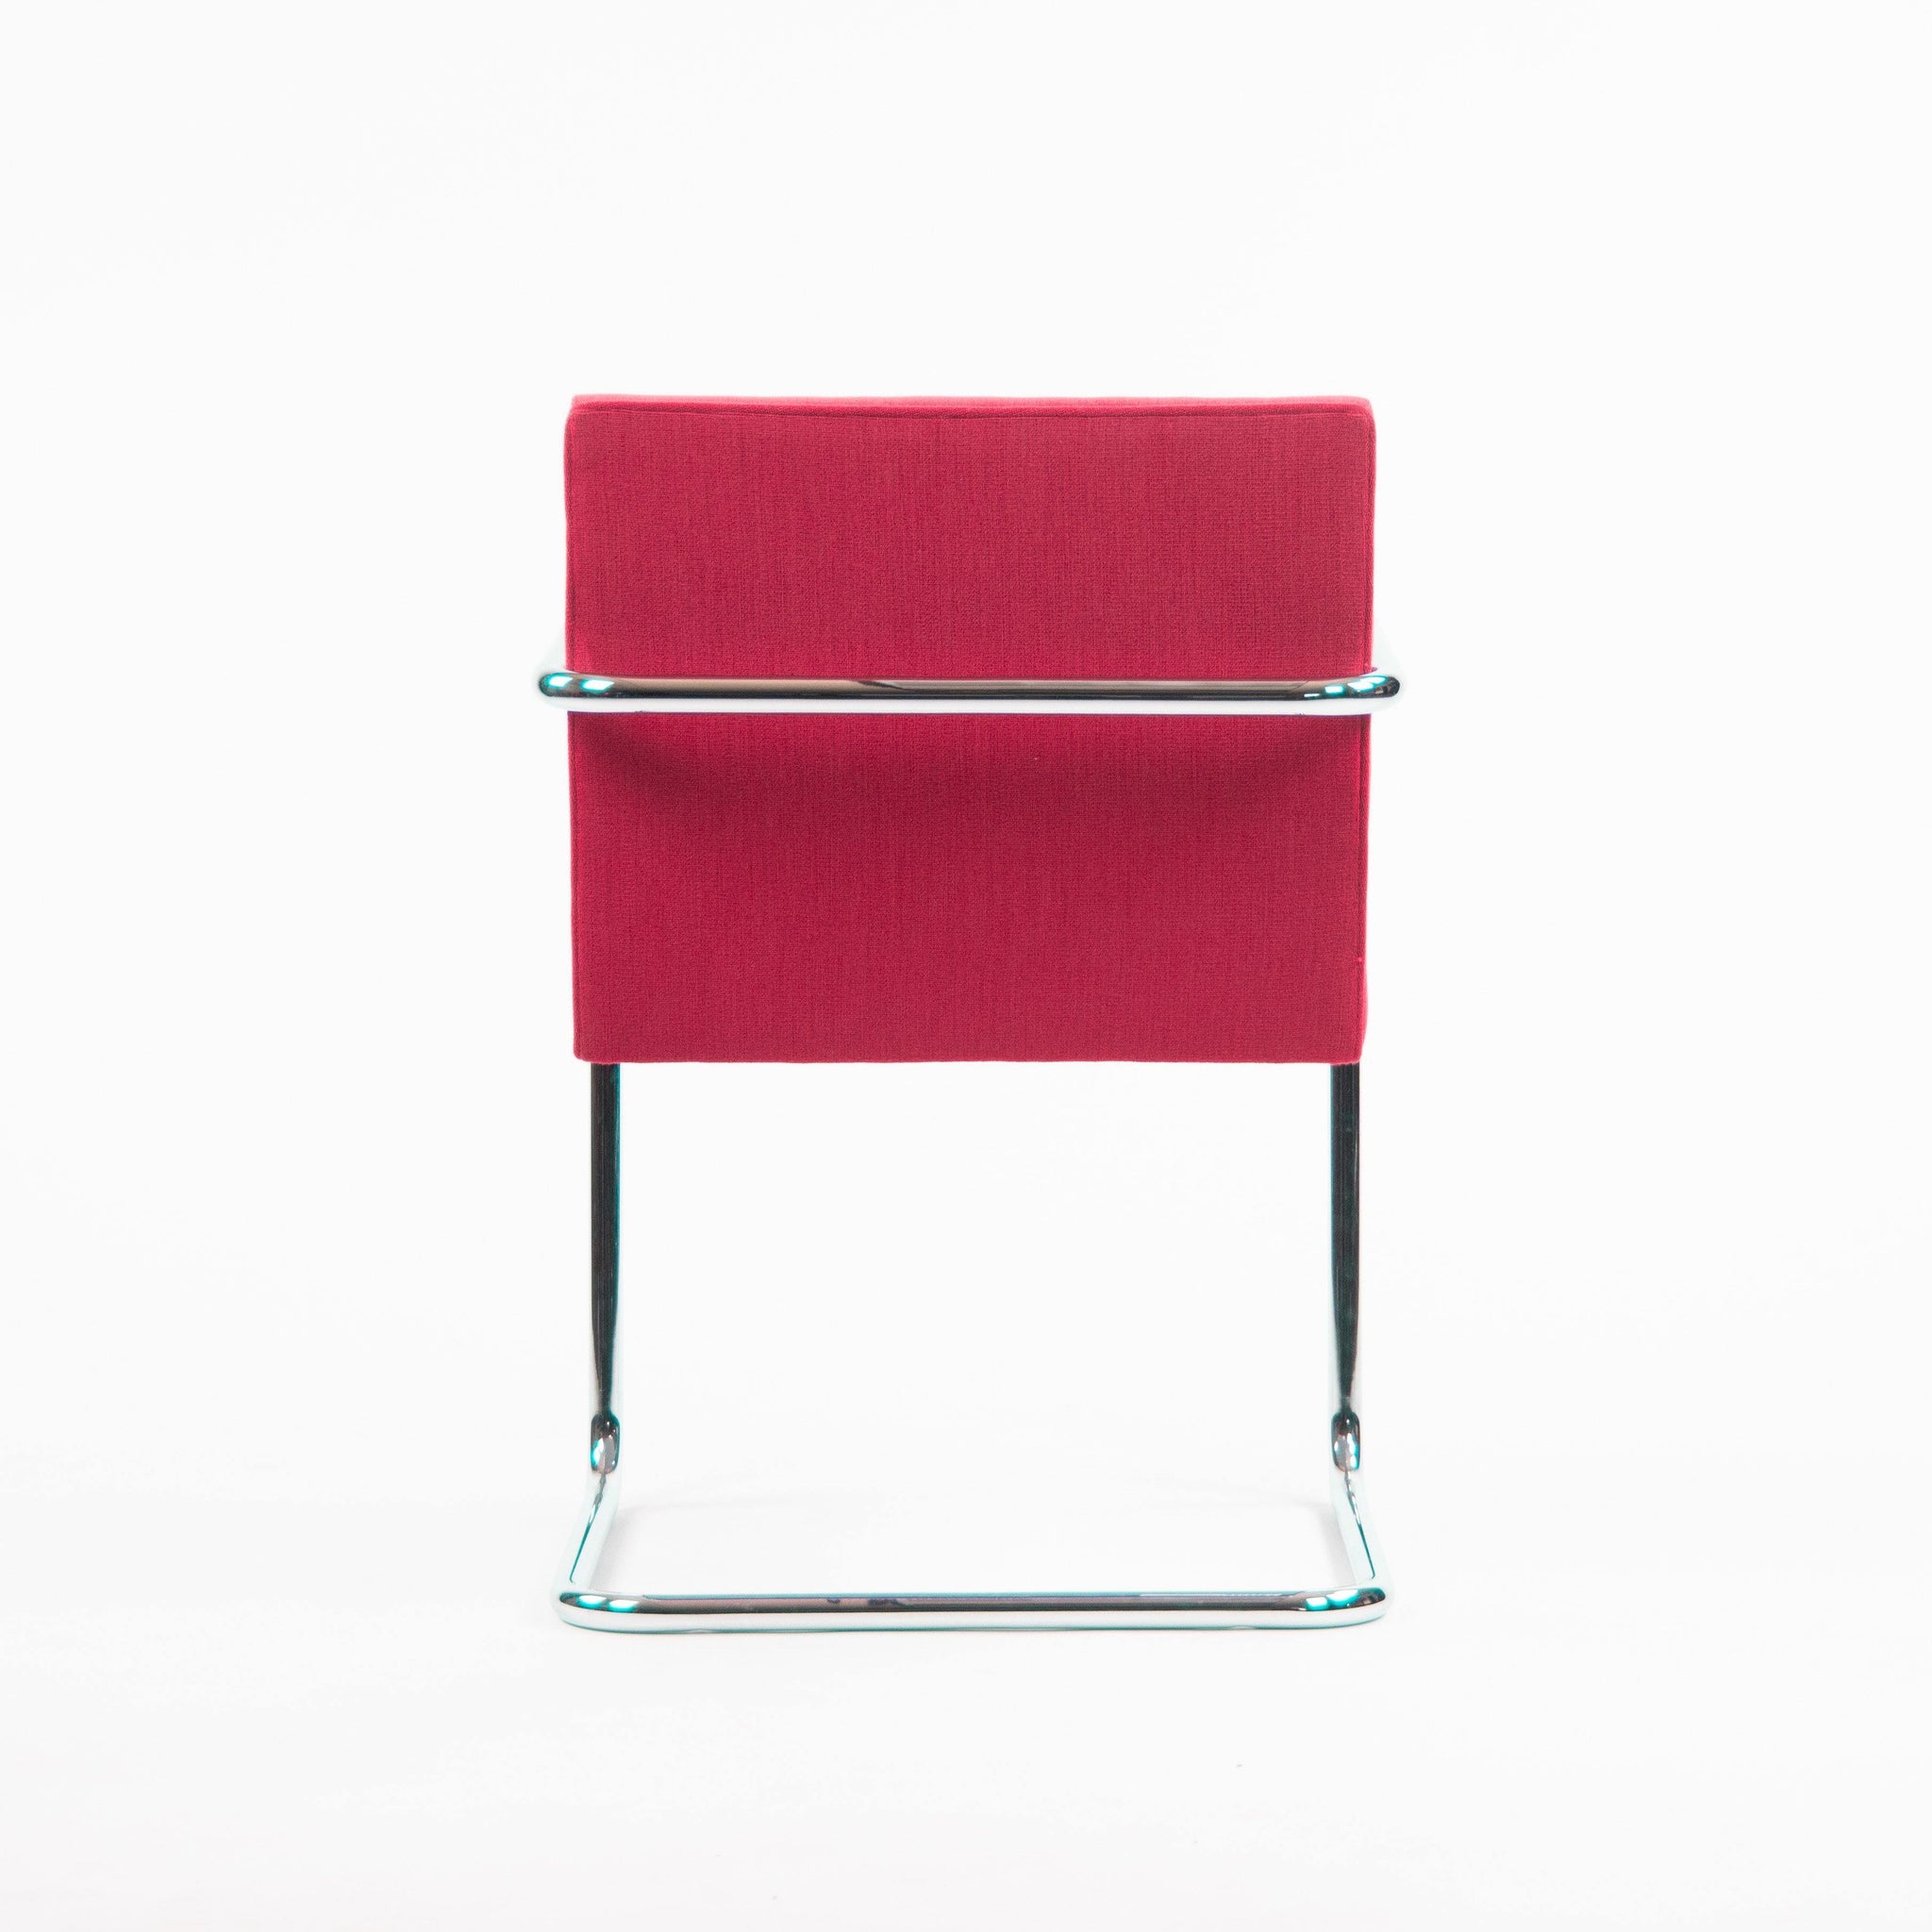 Knoll Mies Van Der Rohe Brno Chairs Red Fabric Sets Avail 2000s - Rarify Inc.